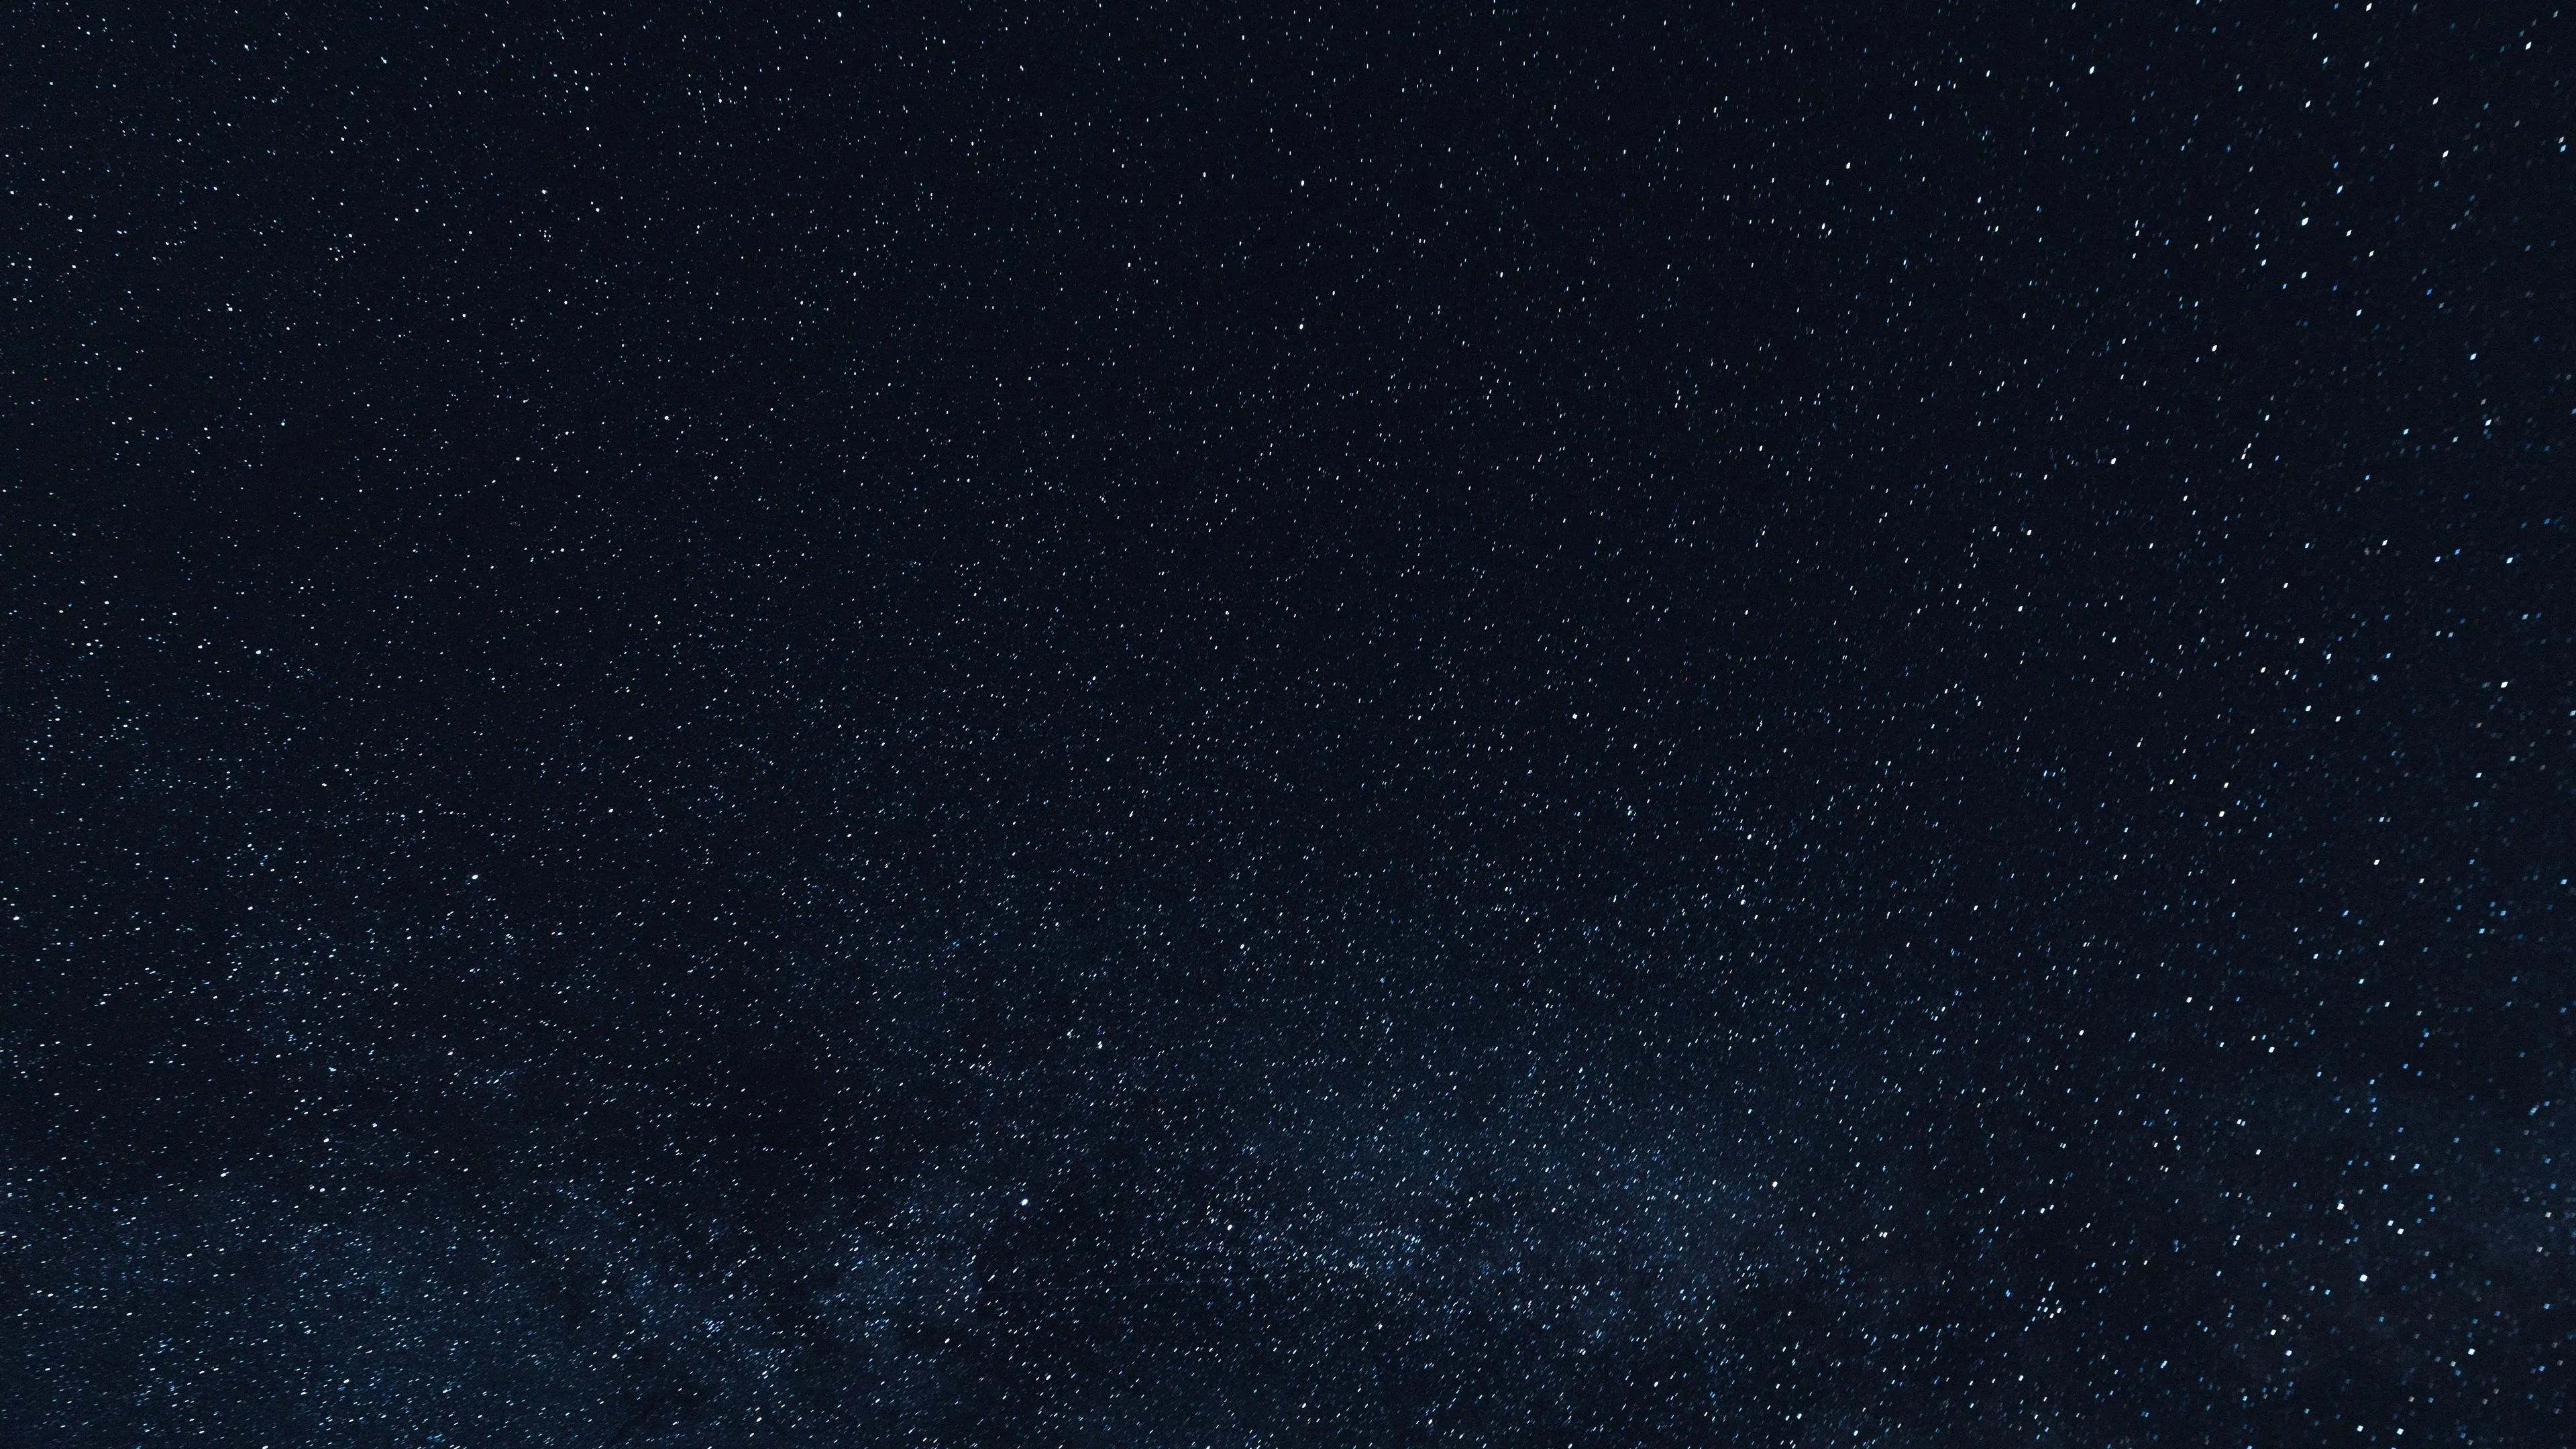 space sky star cosmic night 4k 1540140109 - Space Sky Star Cosmic Night 4k - stars wallpapers, space wallpapers, sky wallpapers, night wallpapers, nature wallpapers, hd-wallpapers, 5k wallpapers, 4k-wallpapers